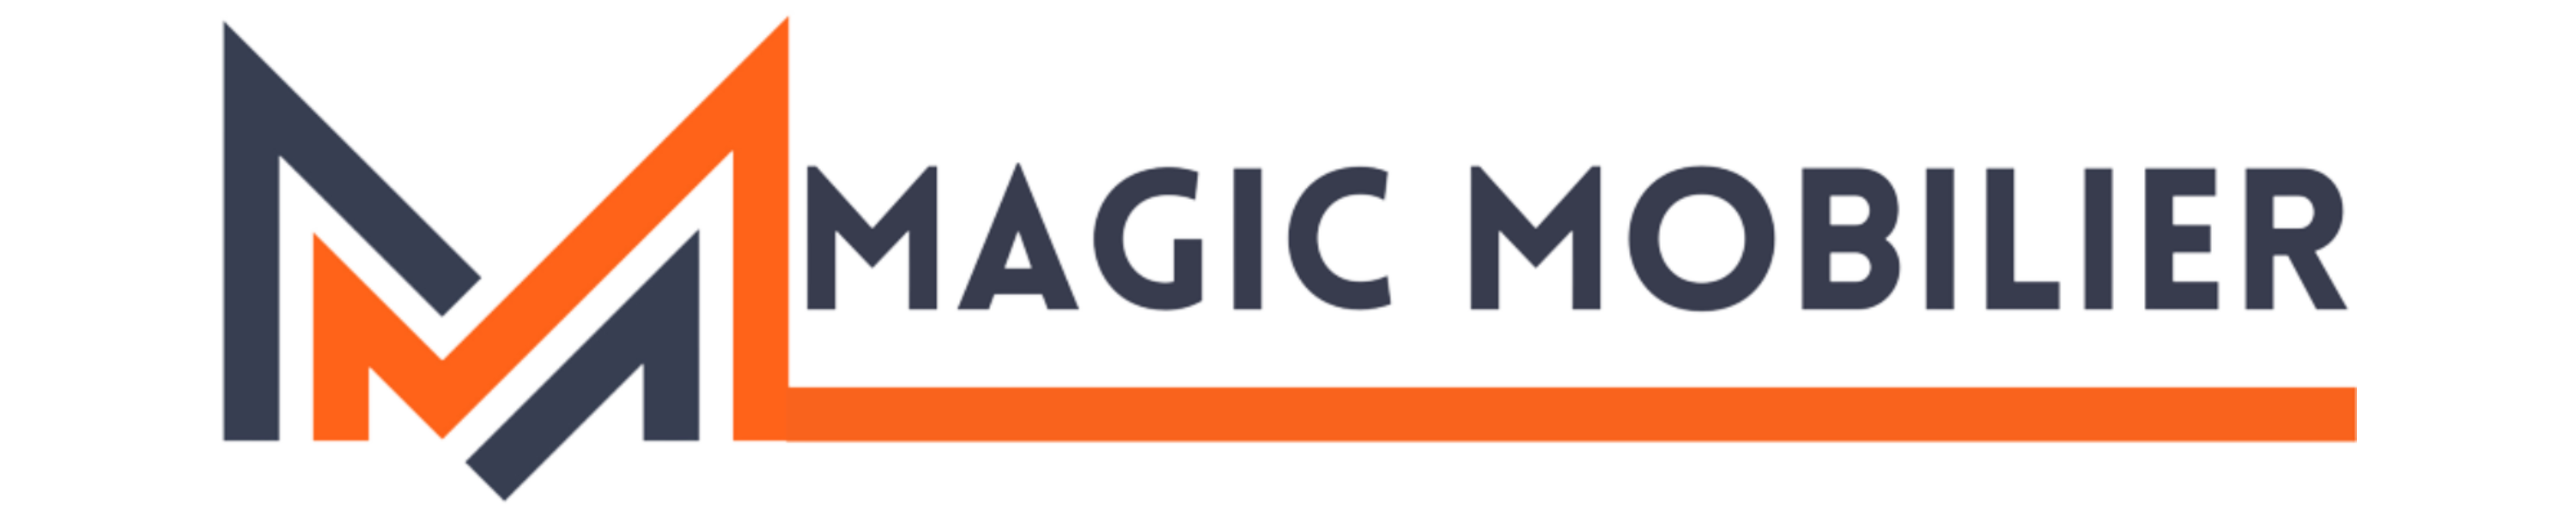 Magic Mobilier 